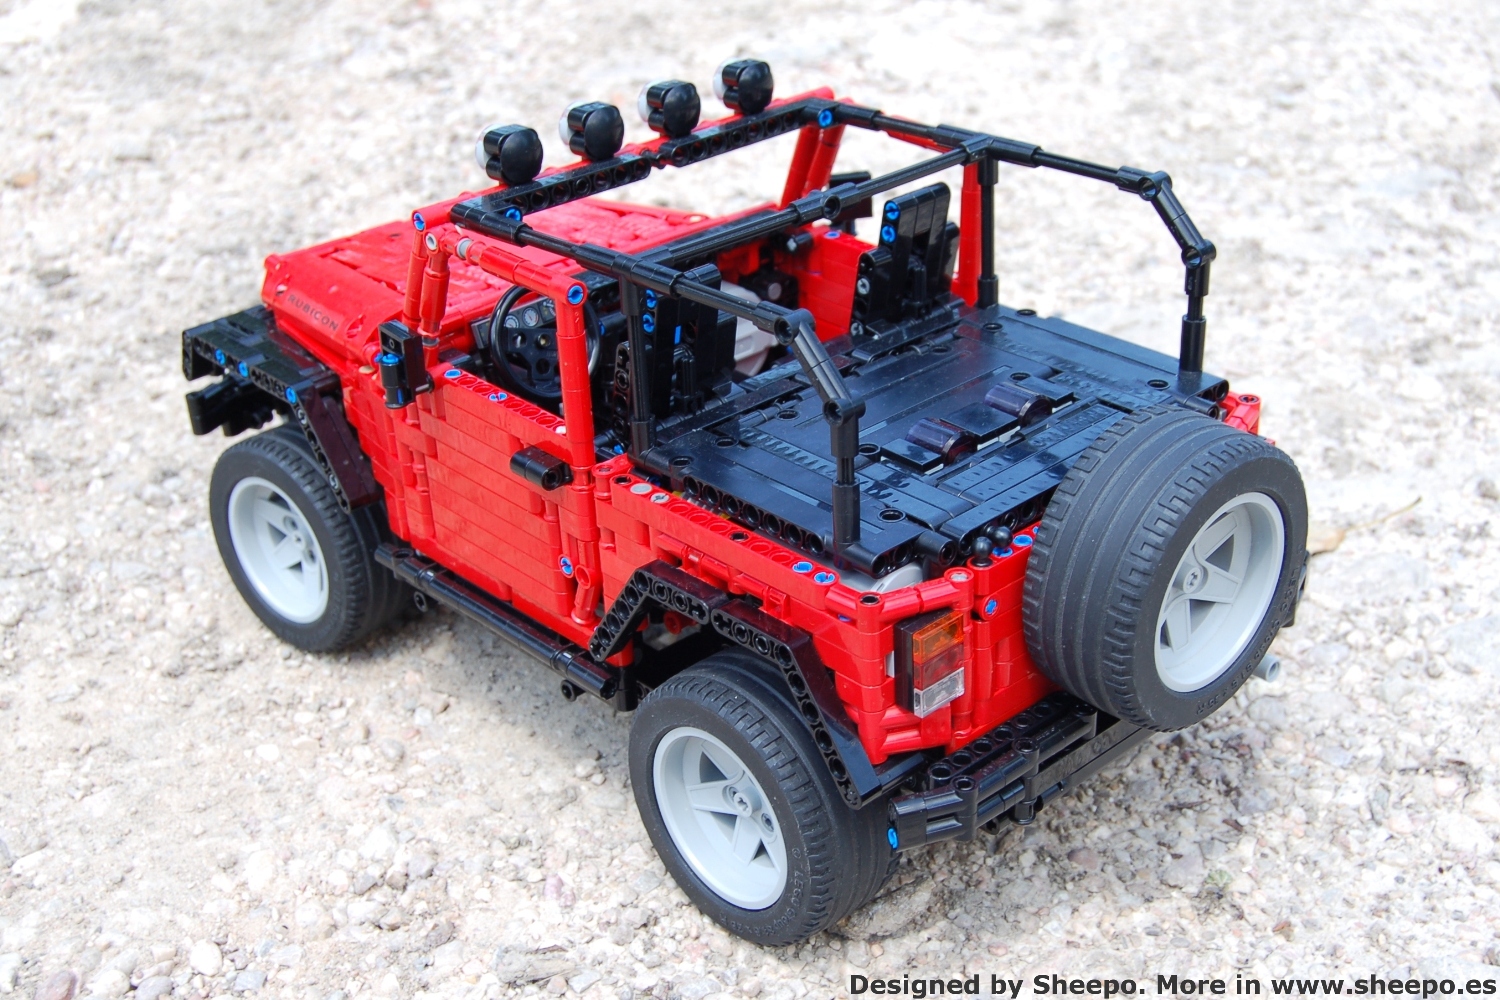 Sheepo's Garage: Jeep Wrangler Rubicon (JK)